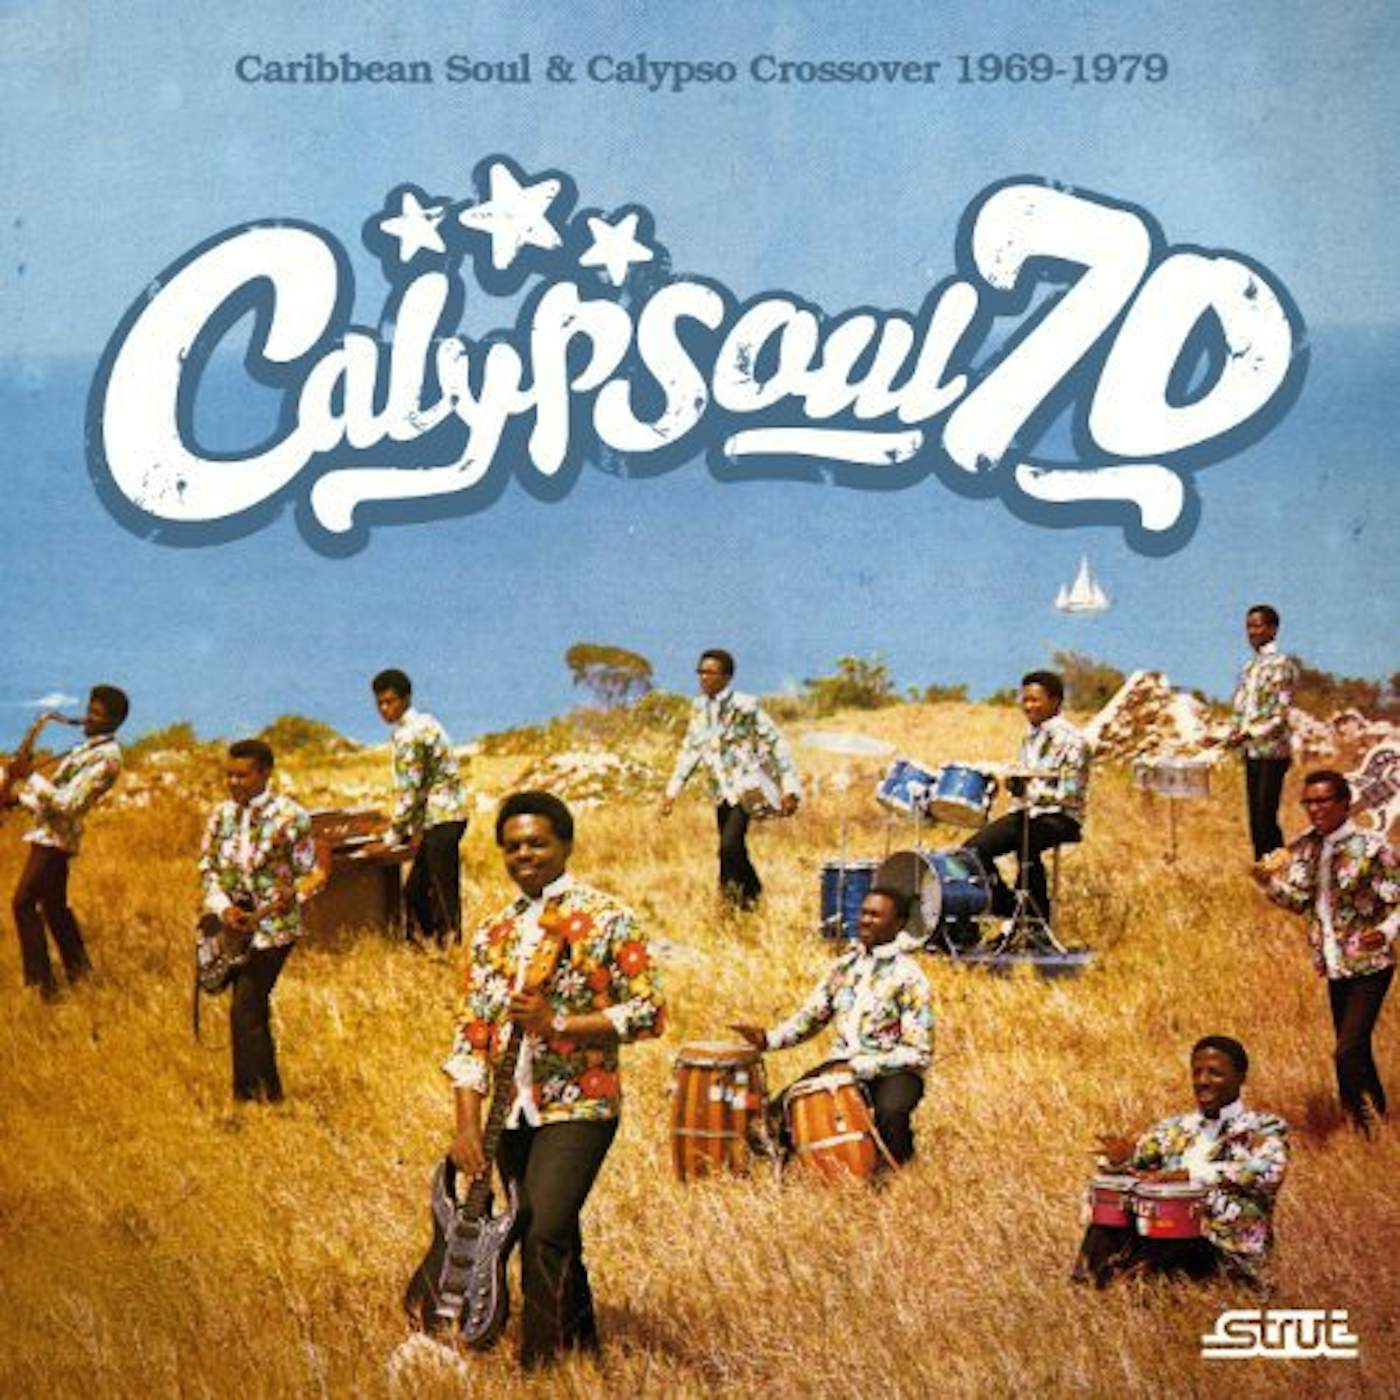 CALYPSOUL 70: CARIBBEAN SOUL & CALYPSOUL / VARIOUS Vinyl Record